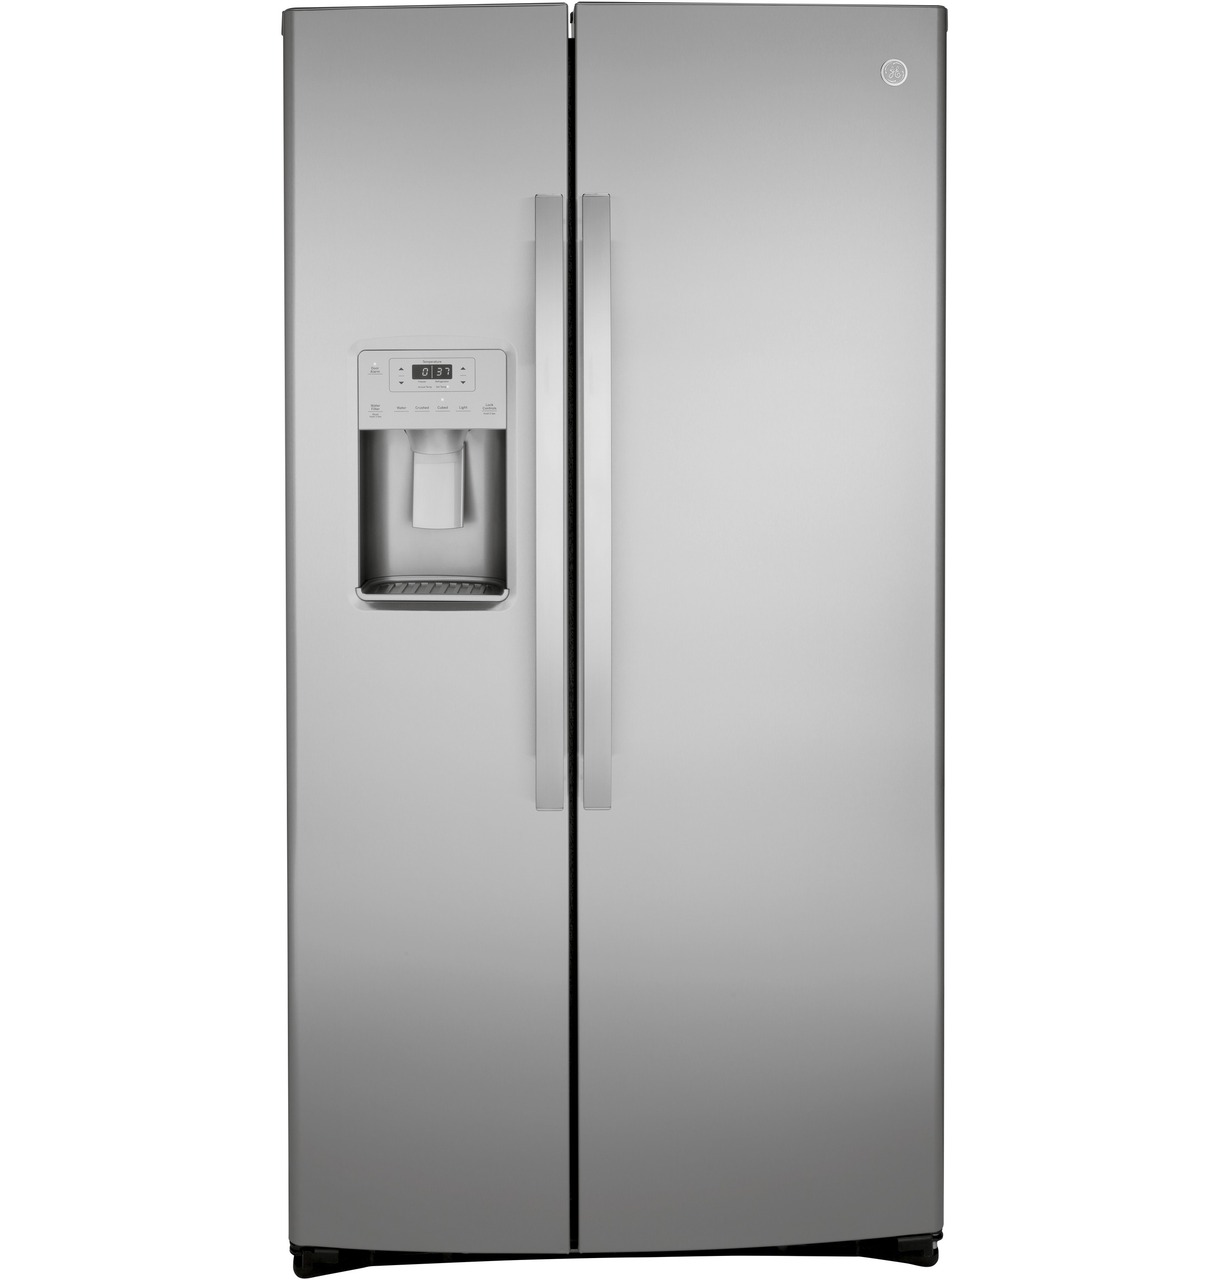 GE counter depth and fingerprint resistant side by side refrigerator.